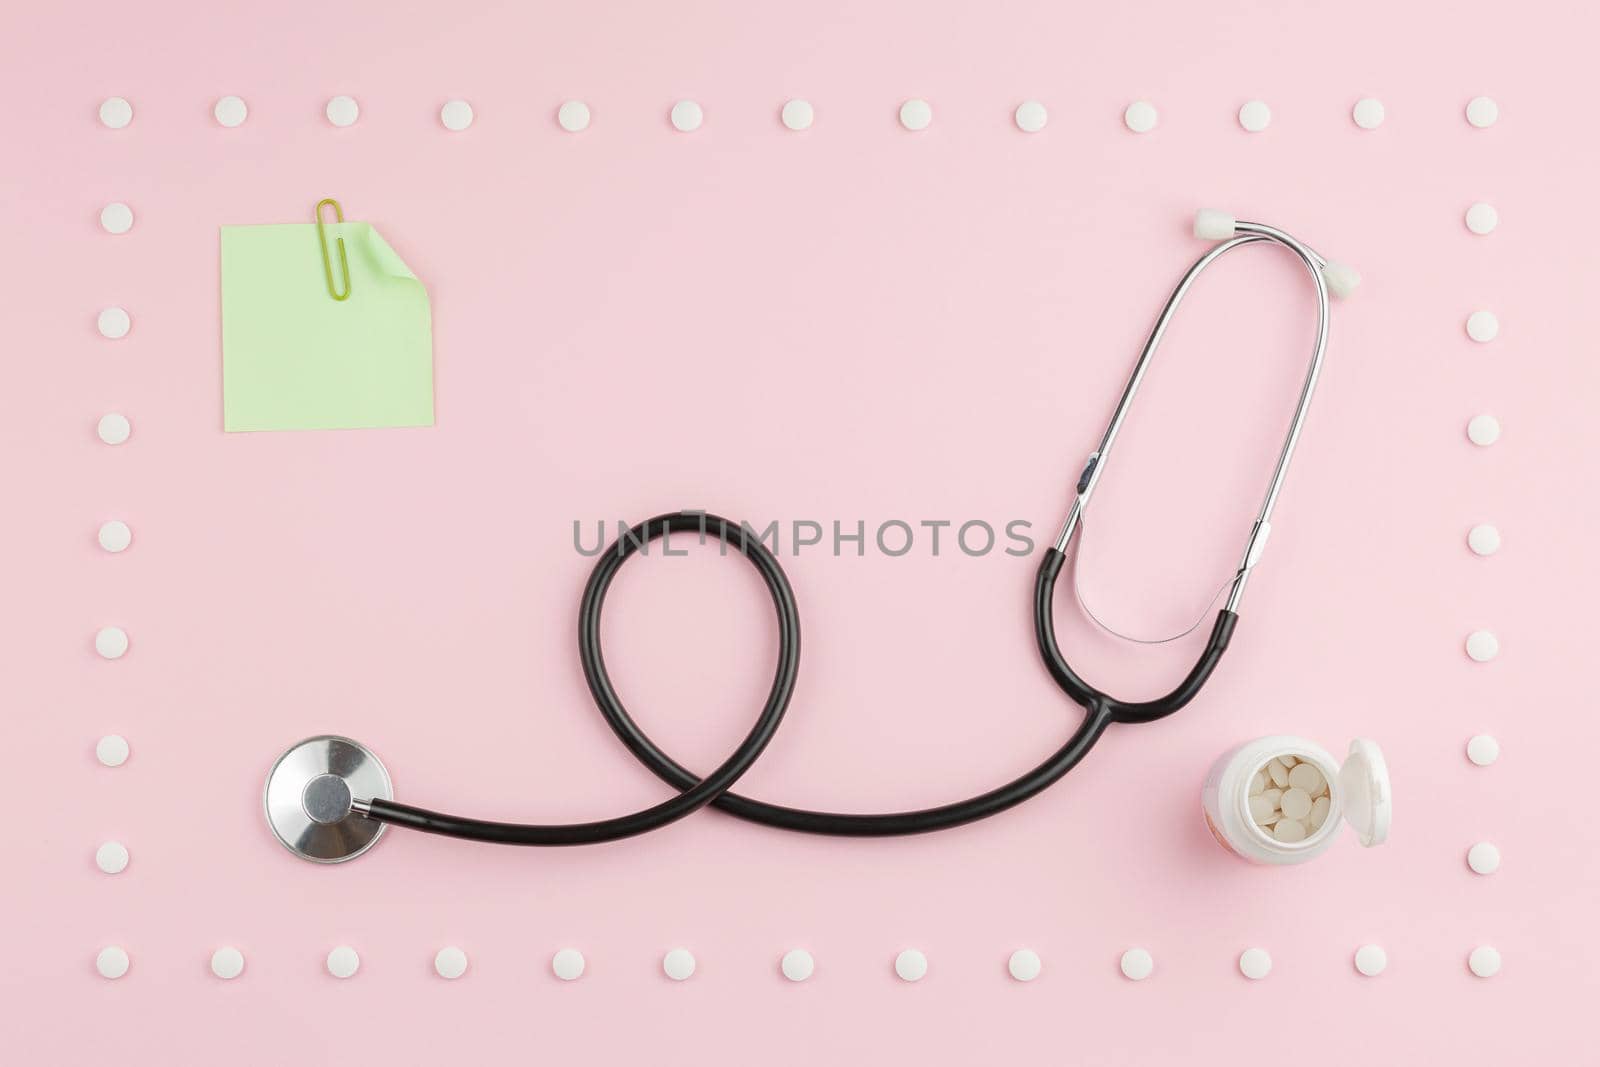 Stethoscope on a pink table. by alexxndr